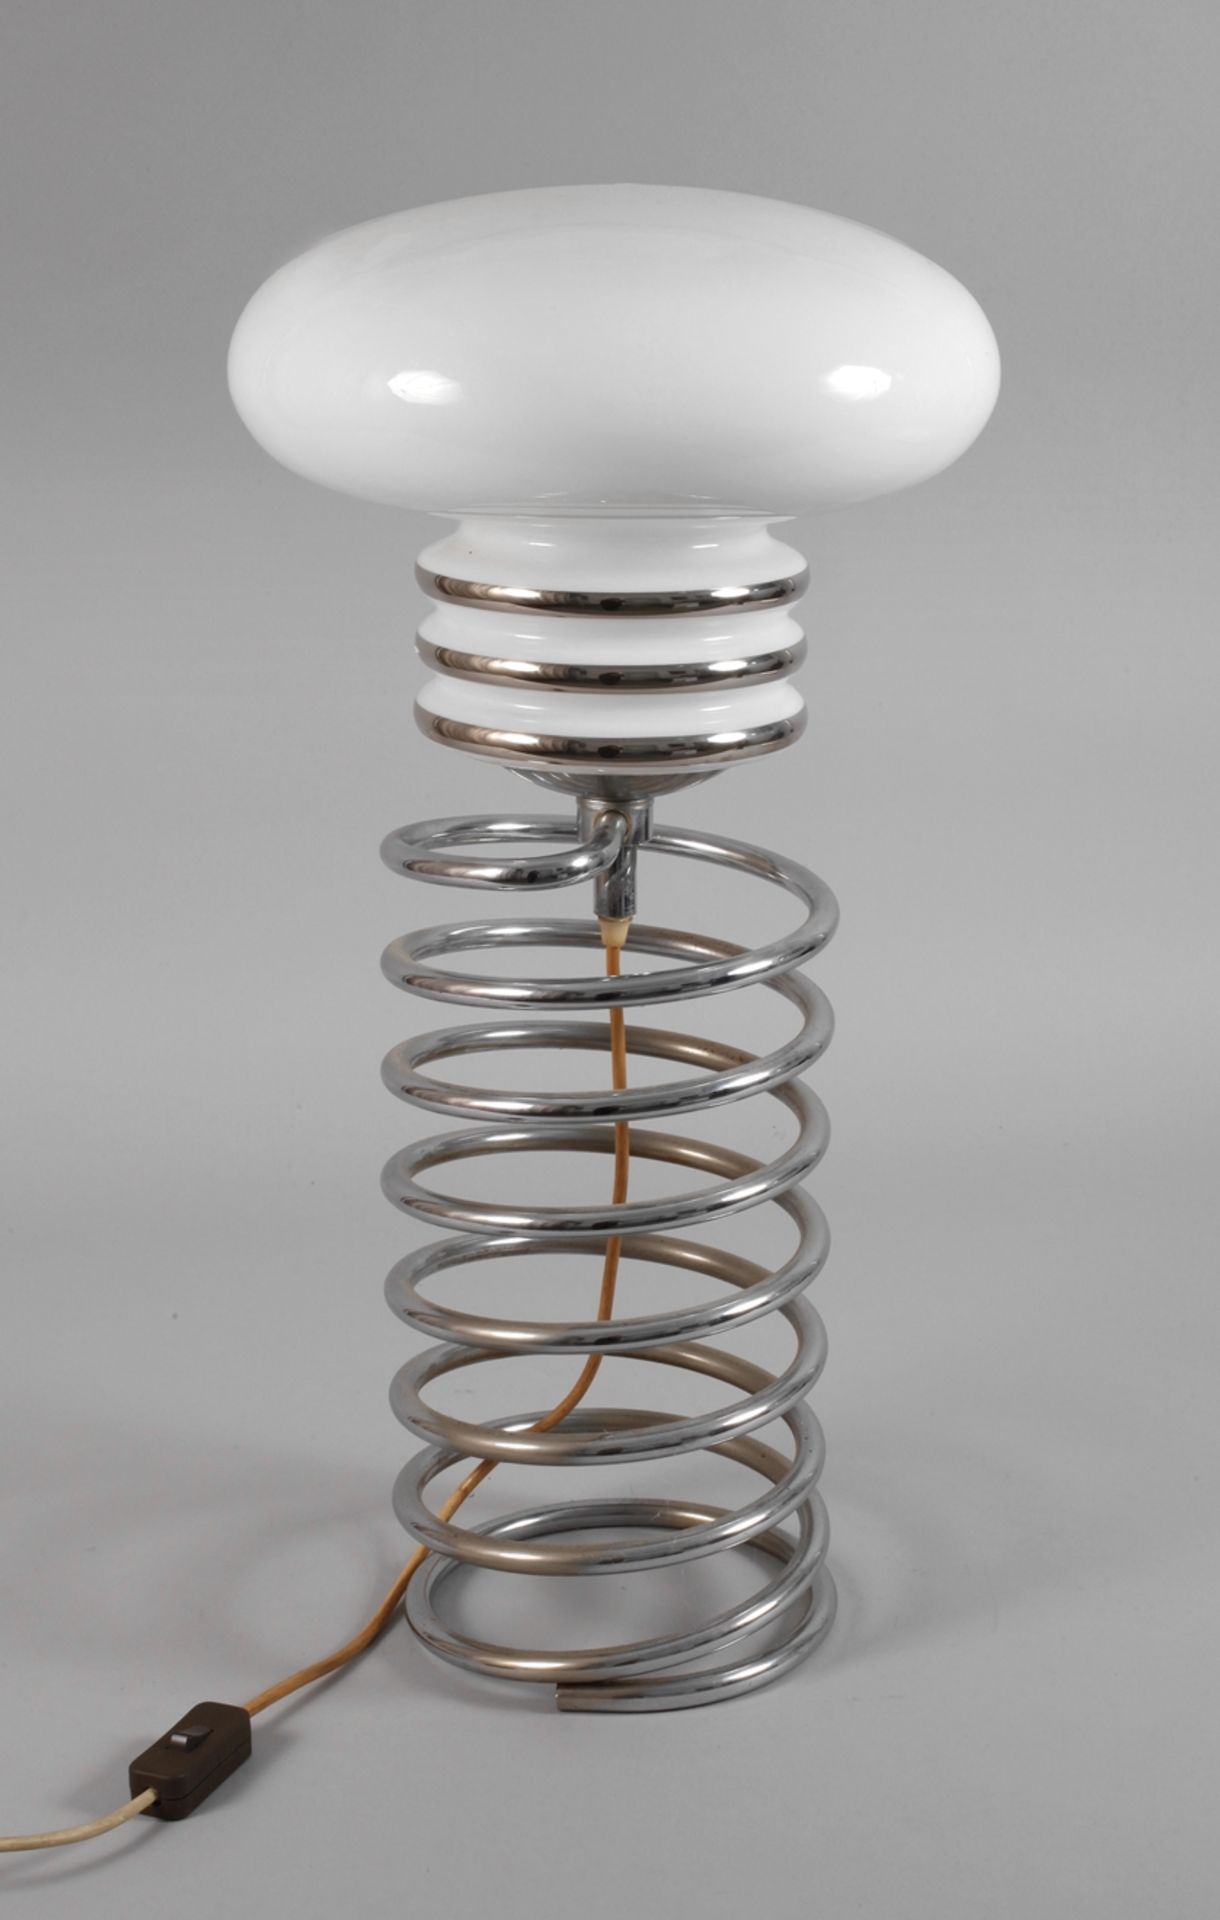 Table lamp design